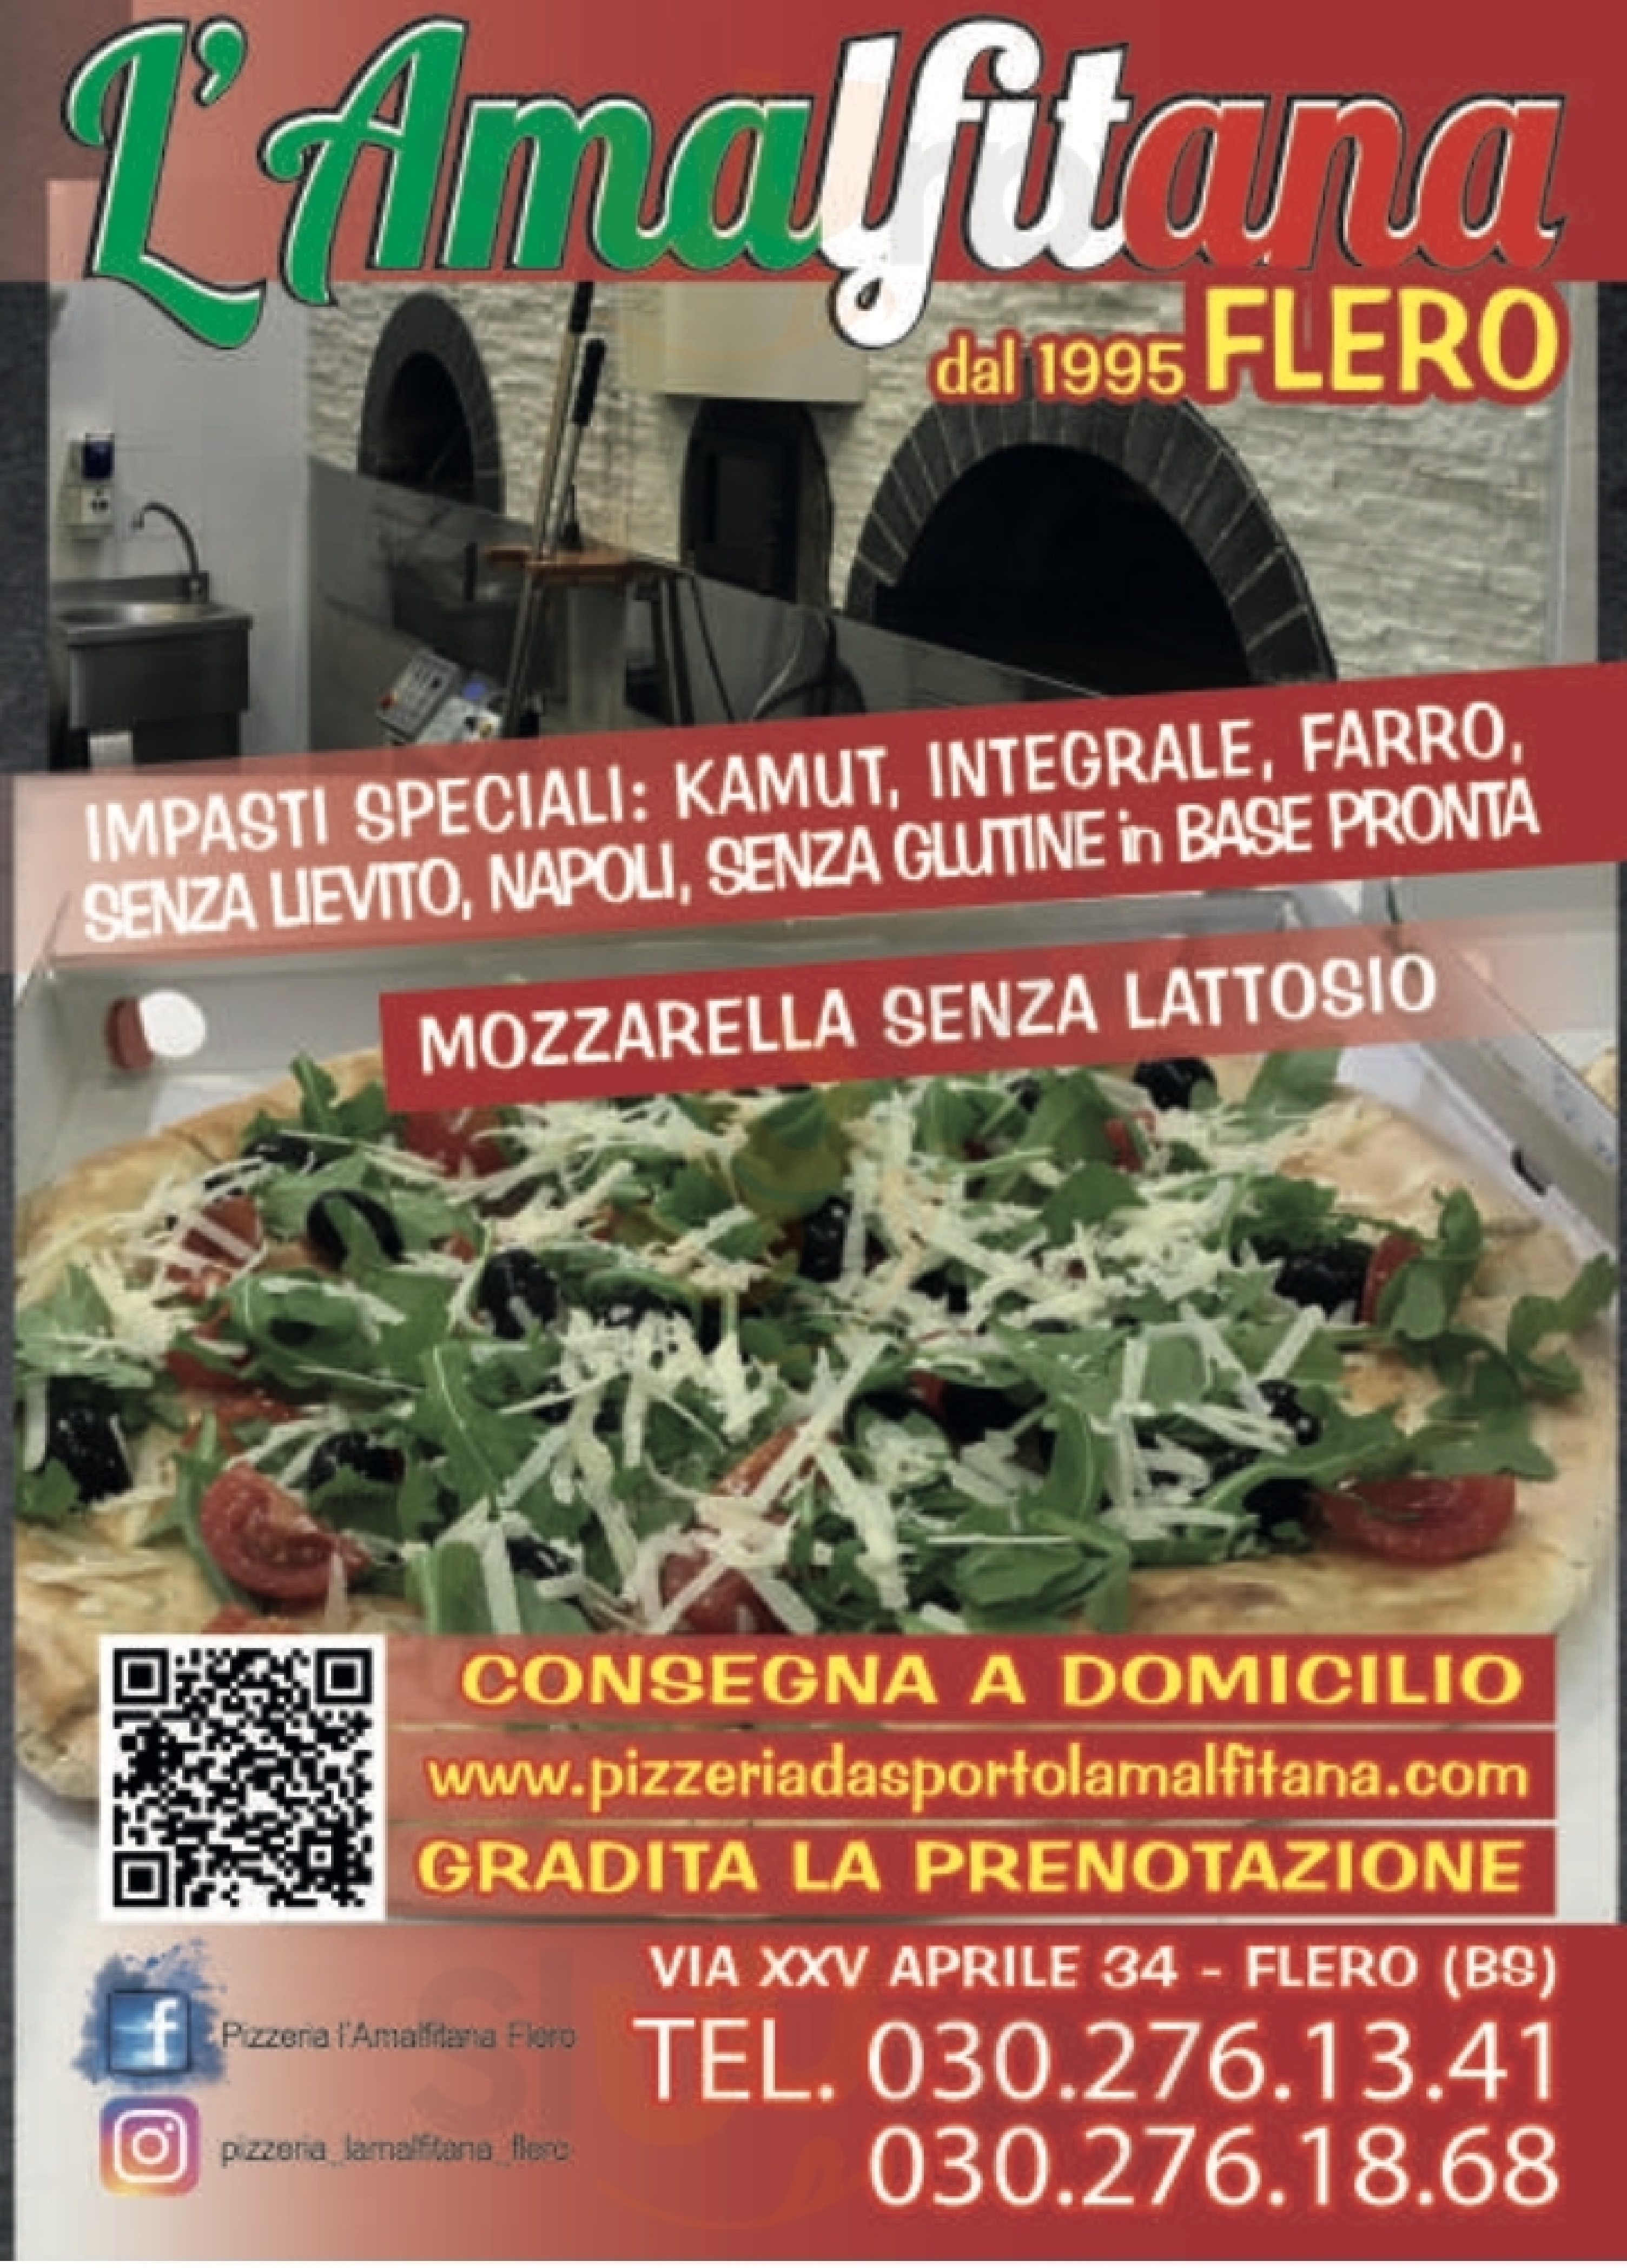 Pizzeria D'Asporto L'Amalfitana Pizzeria L'Amalfitana Pizzeria D'Aspo Flero menù 1 pagina